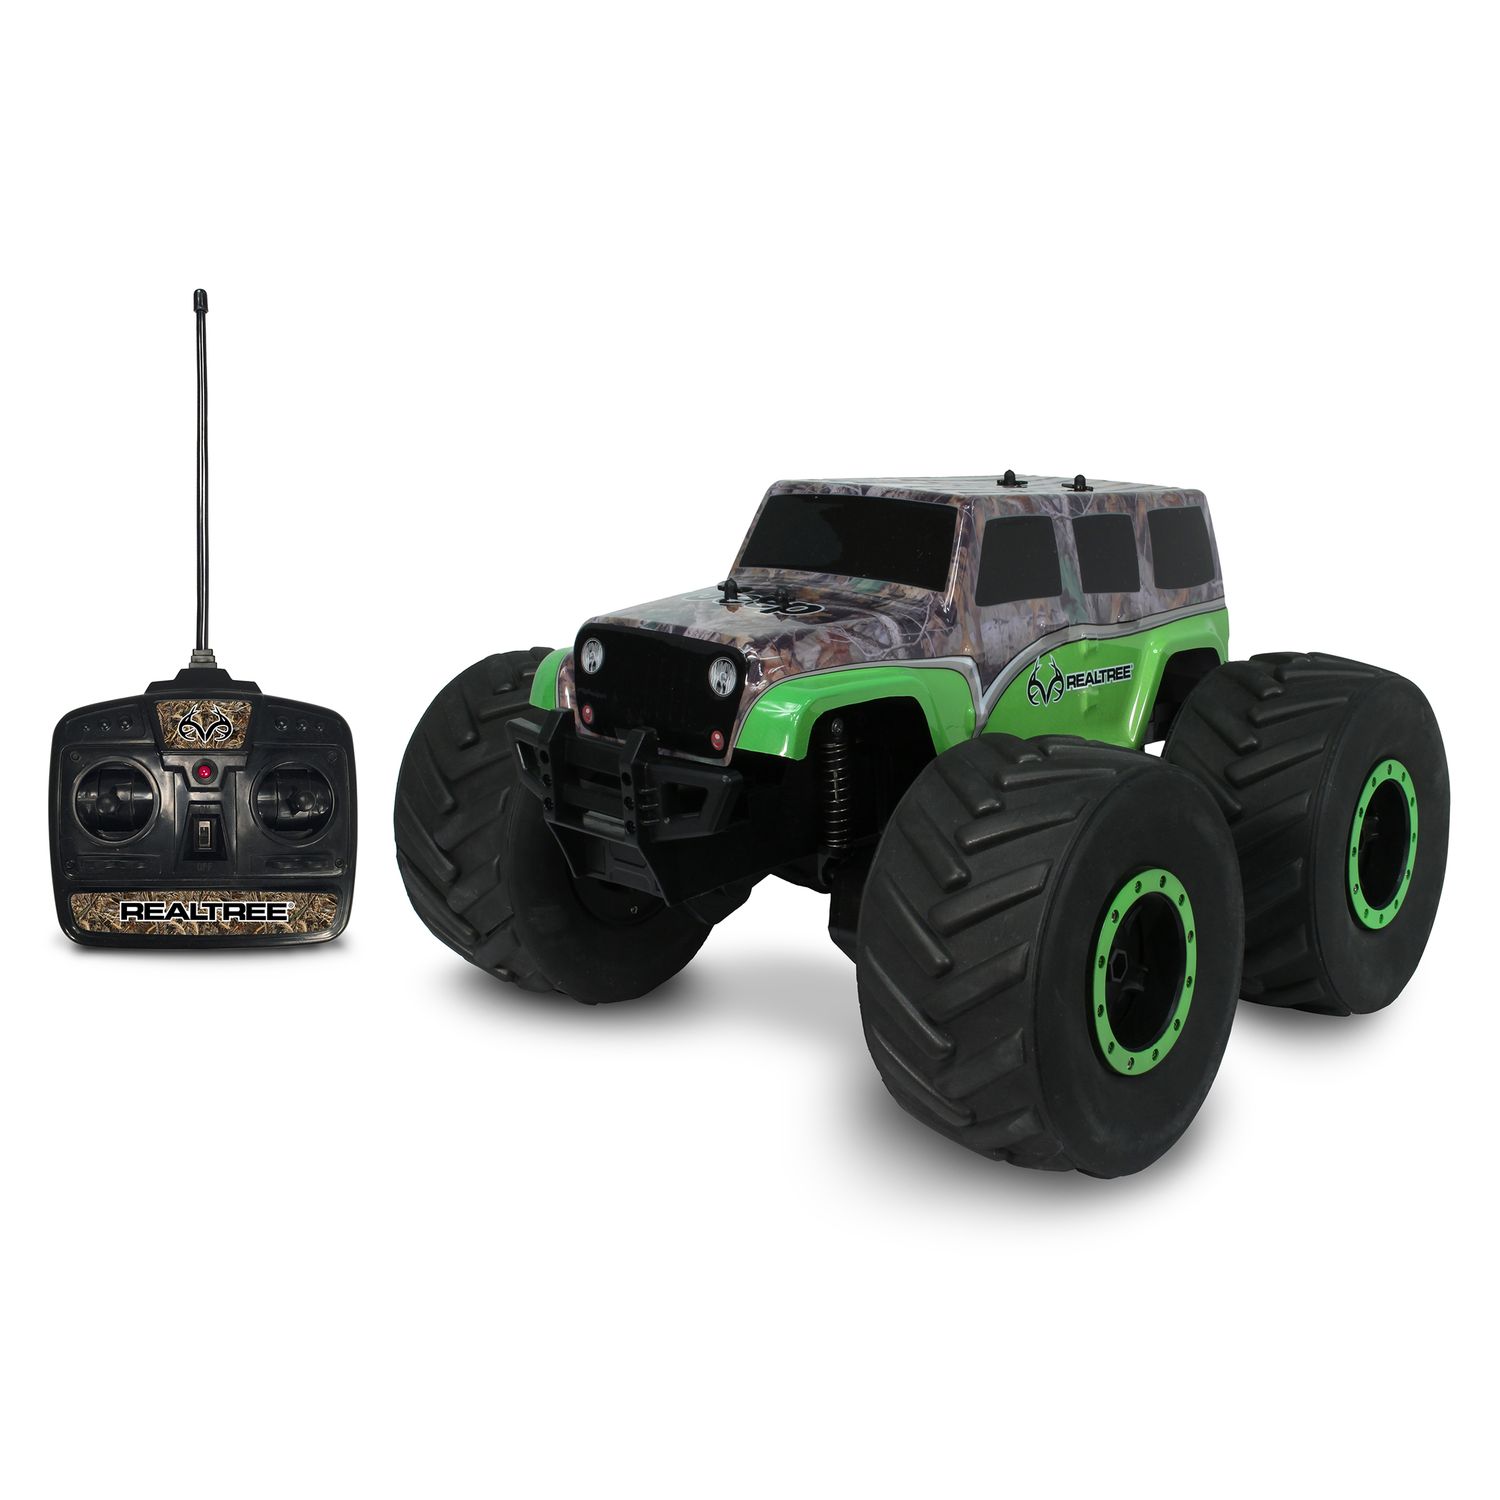 remote control jeep wrangler toy